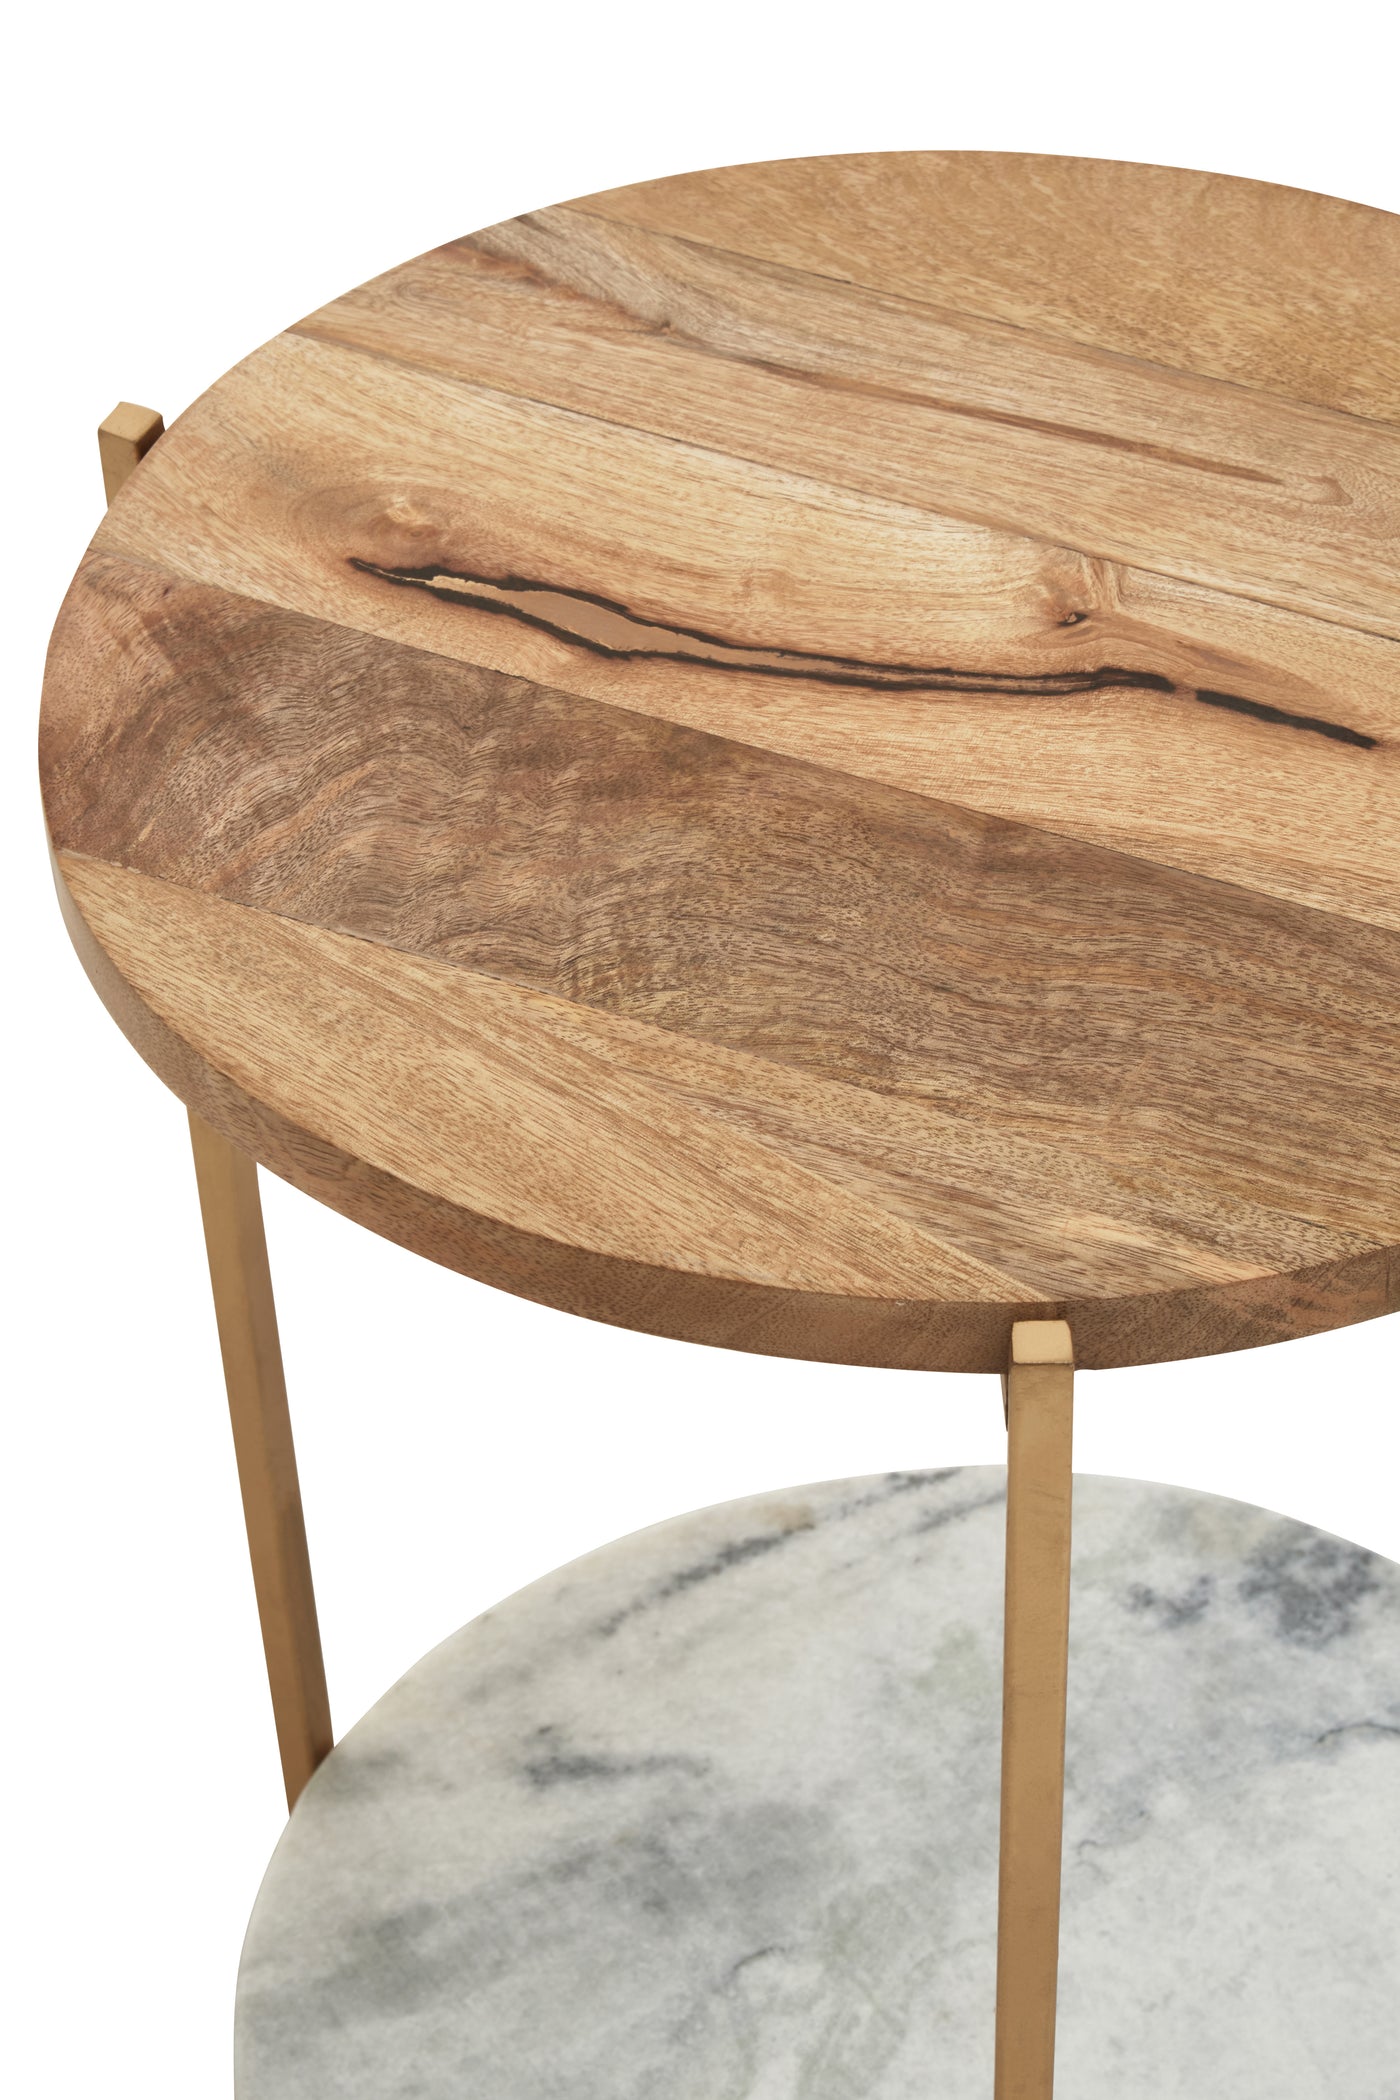 Norfolk Luxury Mandoli White Marble and Wood Side Table